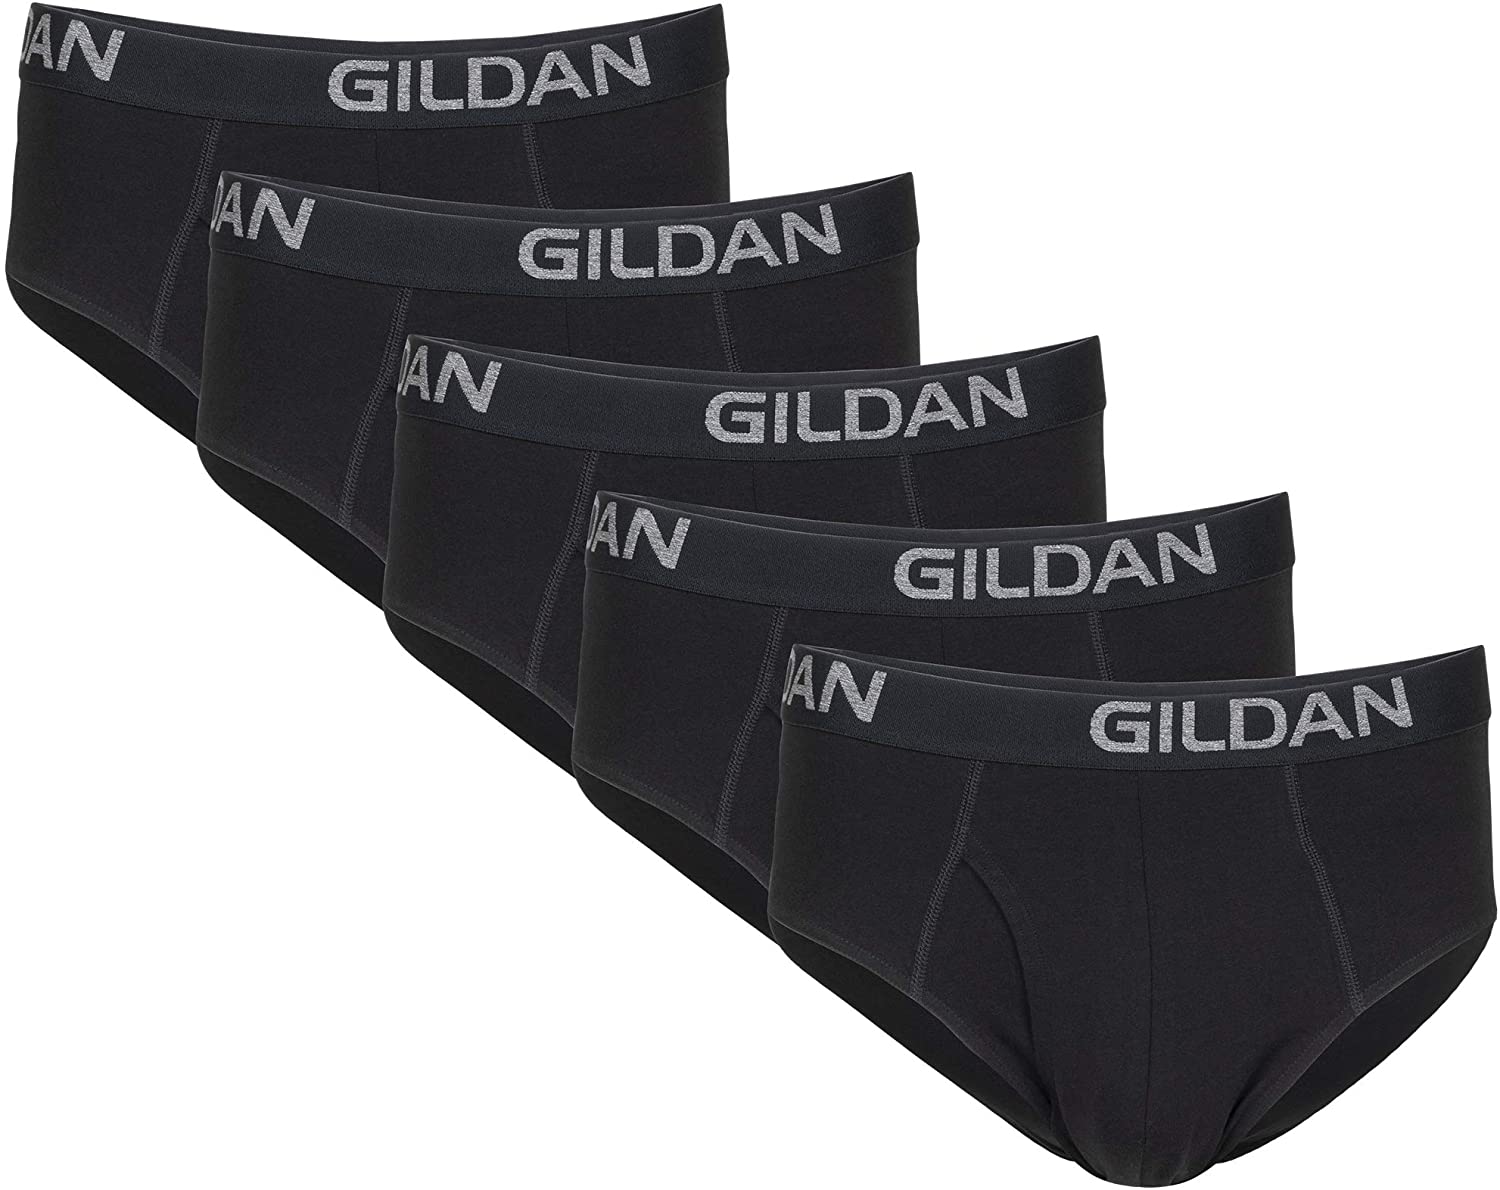 Gildan Men's Cotton Stretch Briefs, 5-Pack